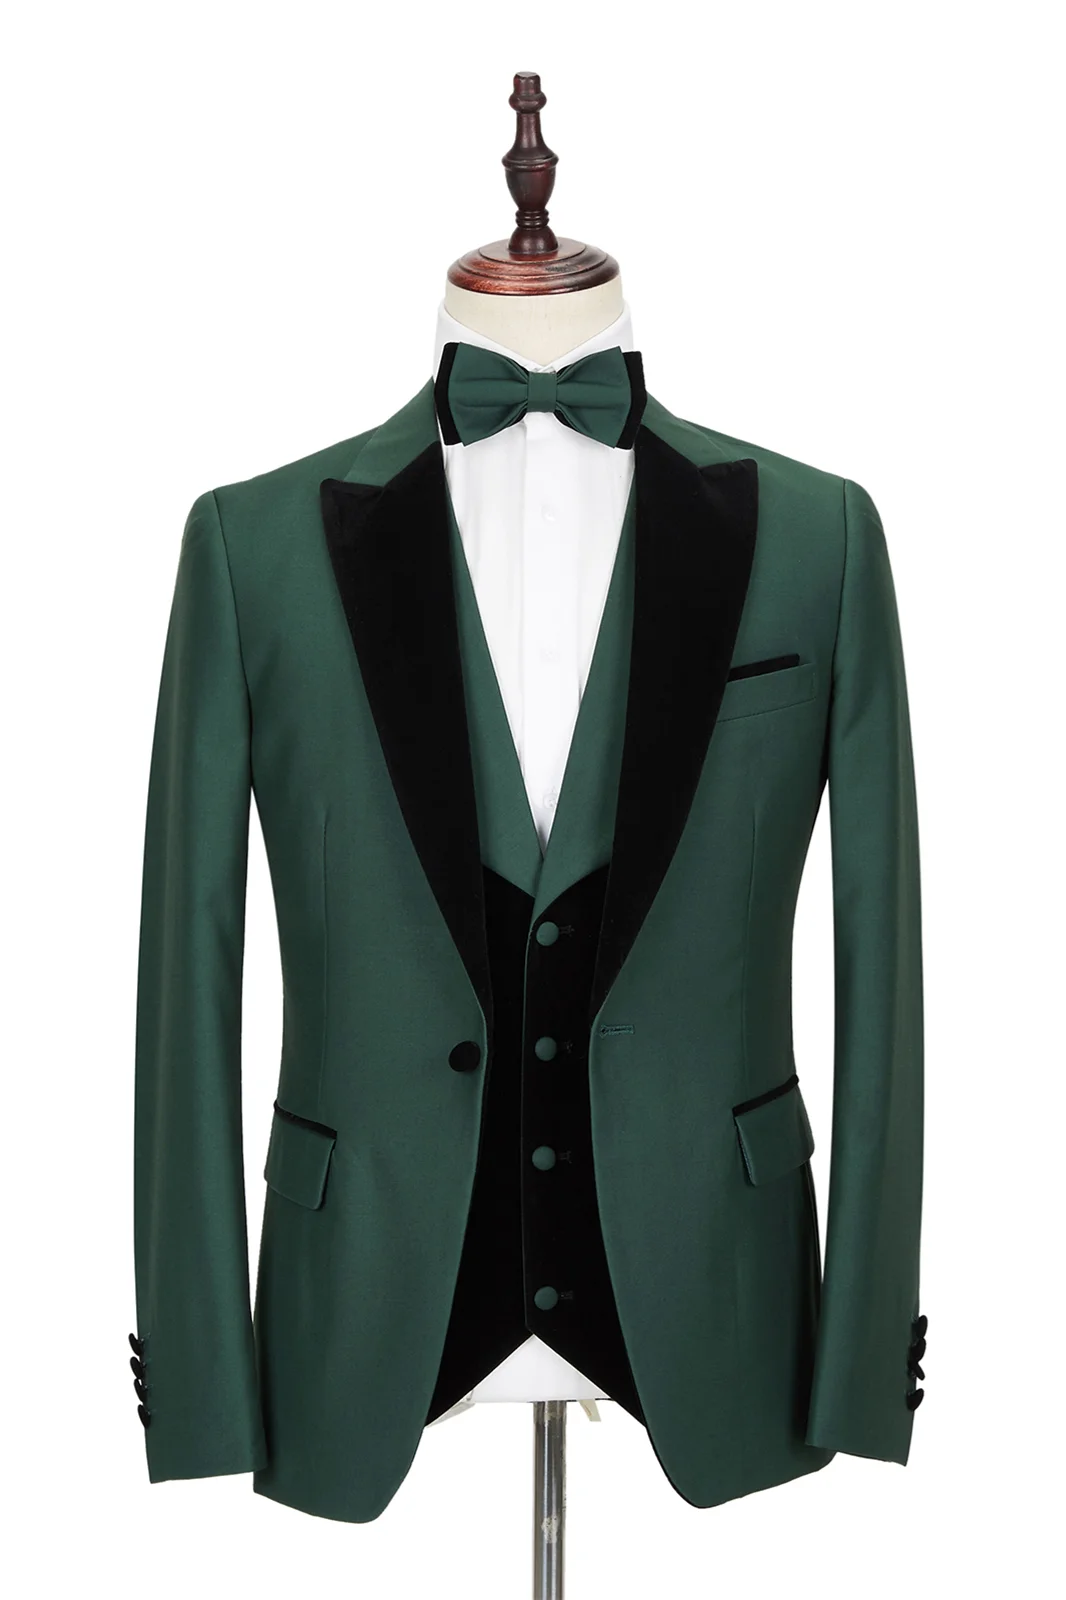 Daisda New Arrive Dark Green Wedding Blazer For Groom With Black Peak Lapel 